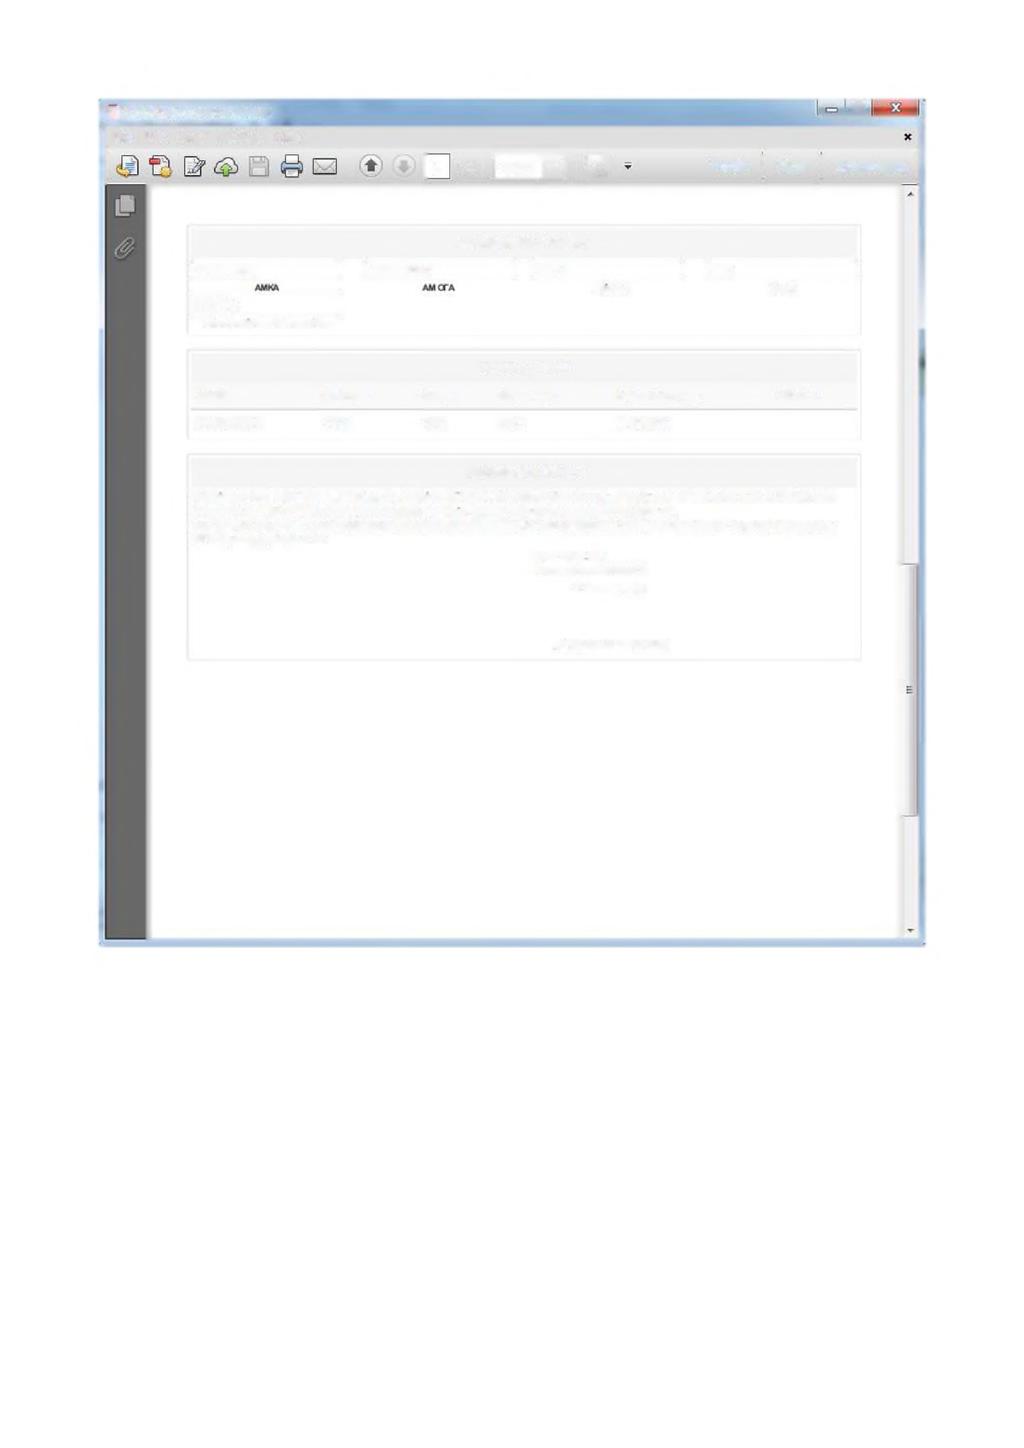 ^ TEZT-2.pdf - Adobe Reader i Θ File Edit View Window Help [.